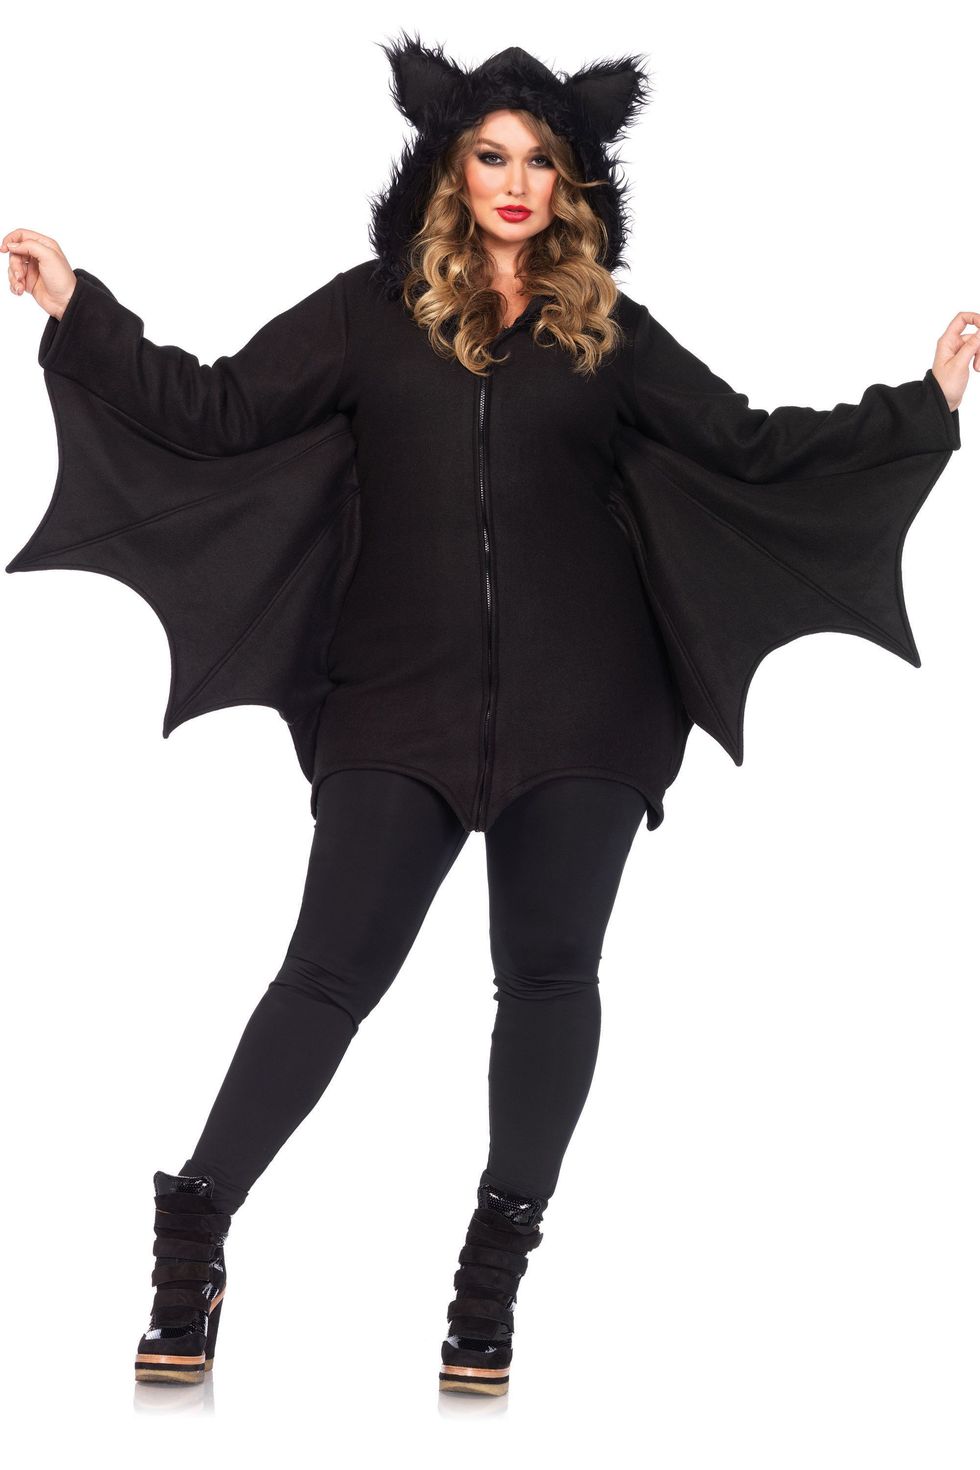 DIY Halloween Plus-Size Costumes for Women